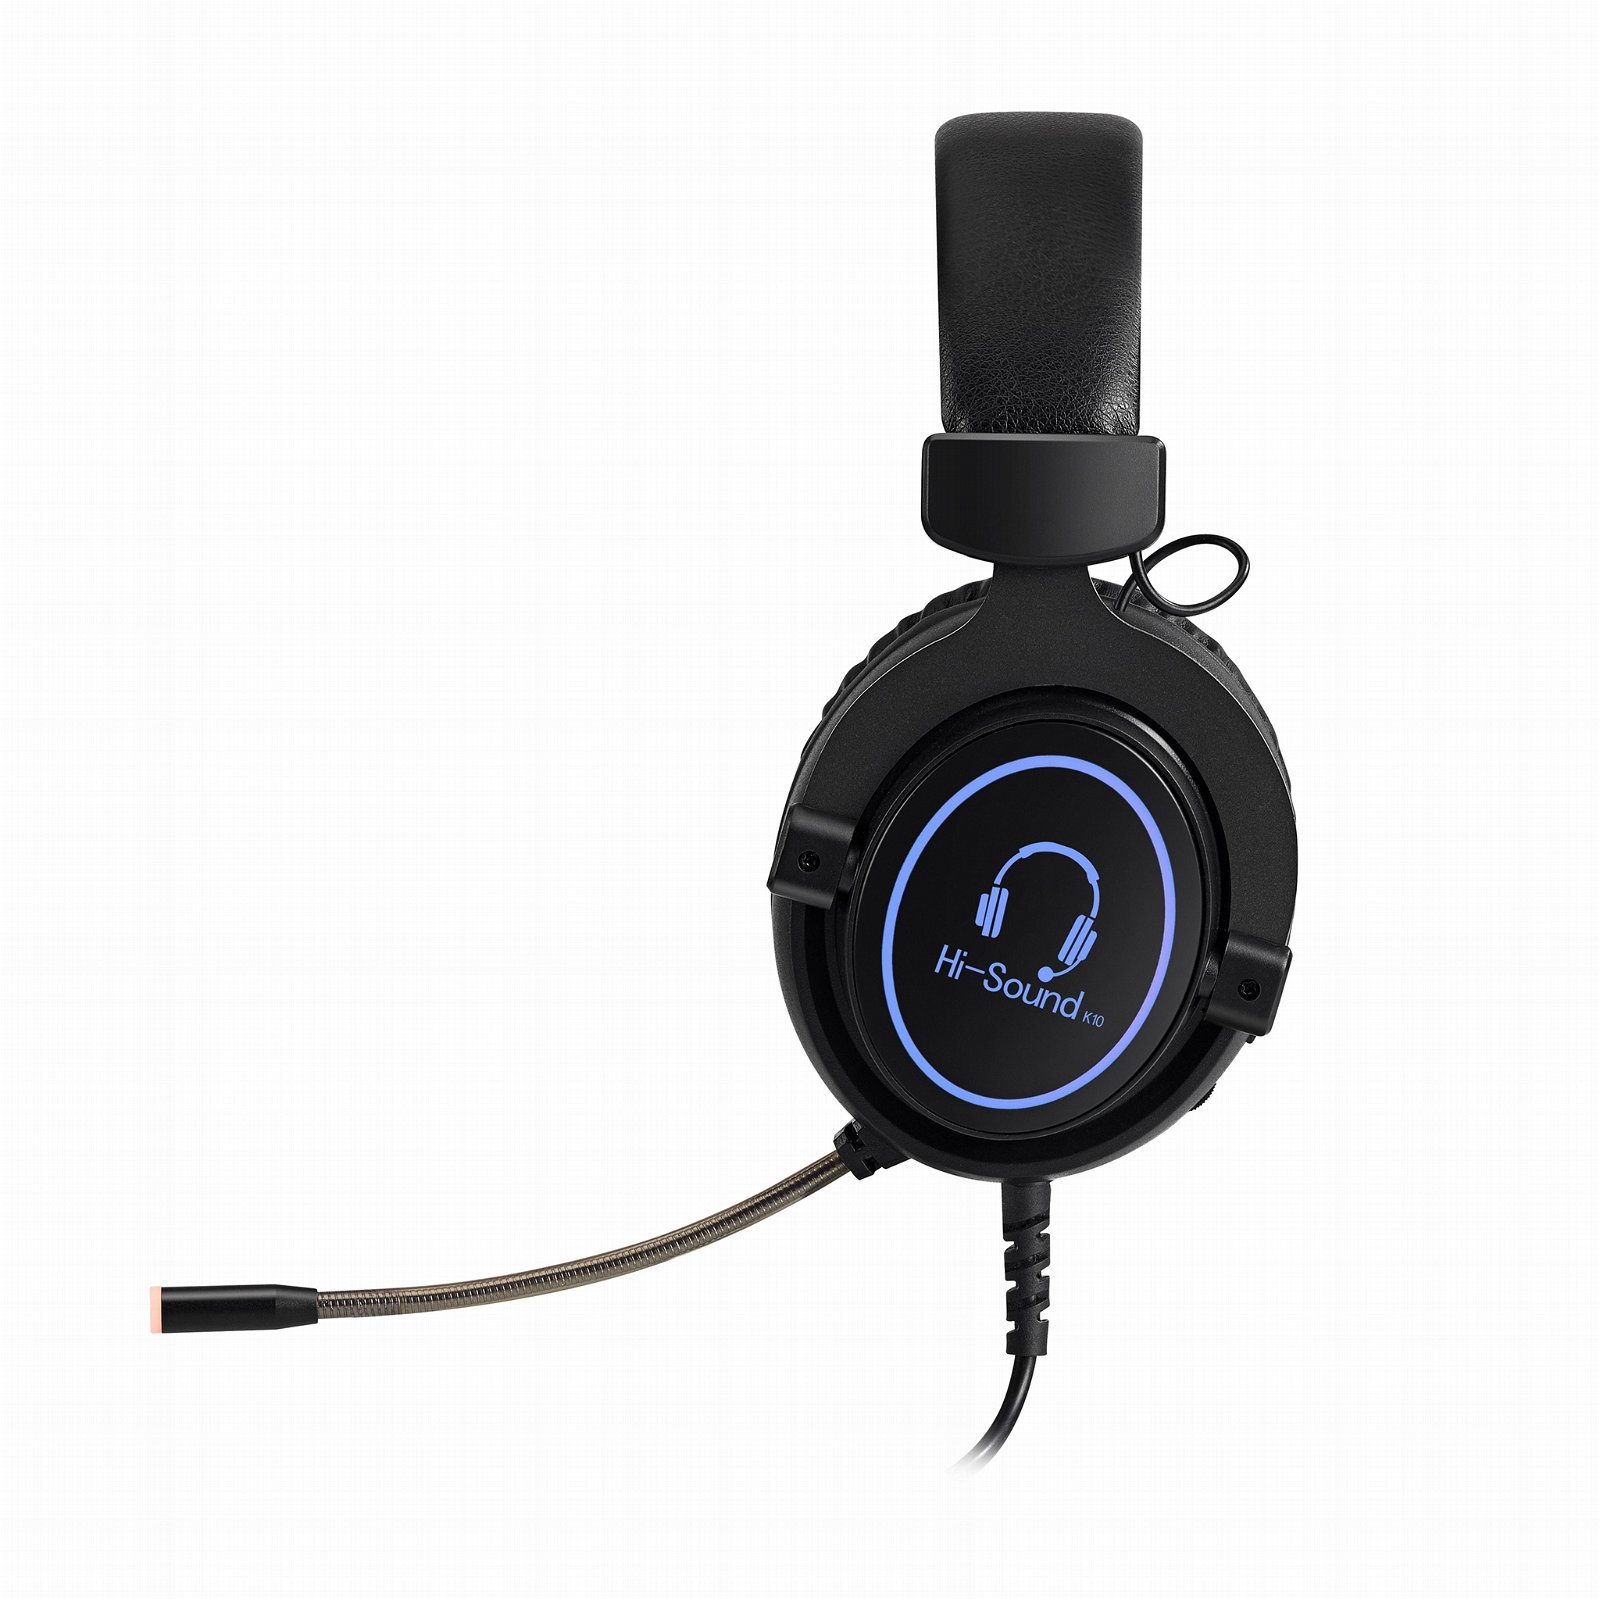 Dongguan Factory Hi-sound RGB gaming headset headphones 3